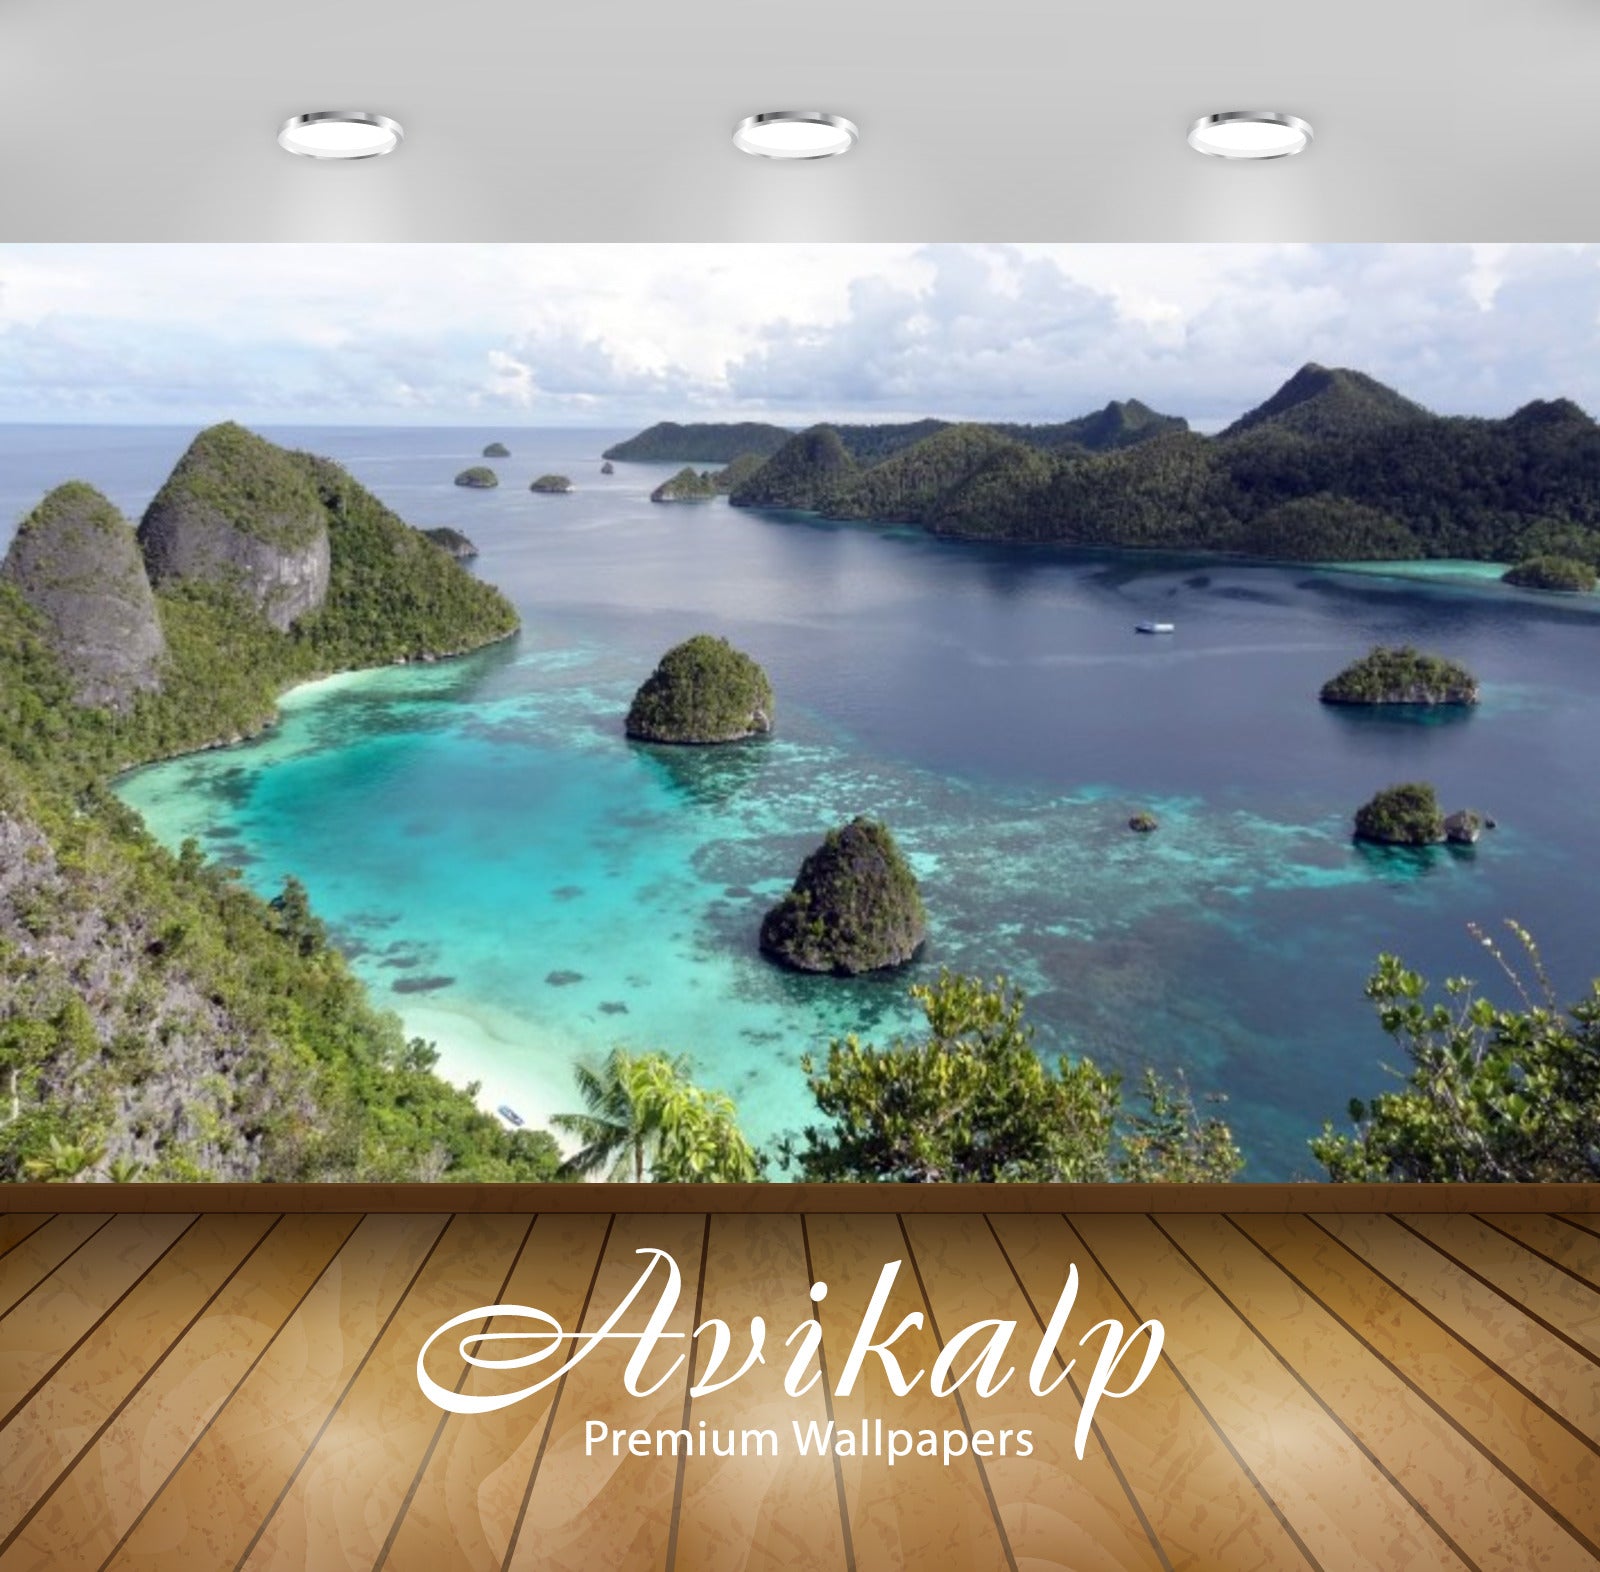 Avikalp Exclusive Awi2933 Raja Ampat Wayag Landscape Nature Full HD Wallpapers for Living room, Hall